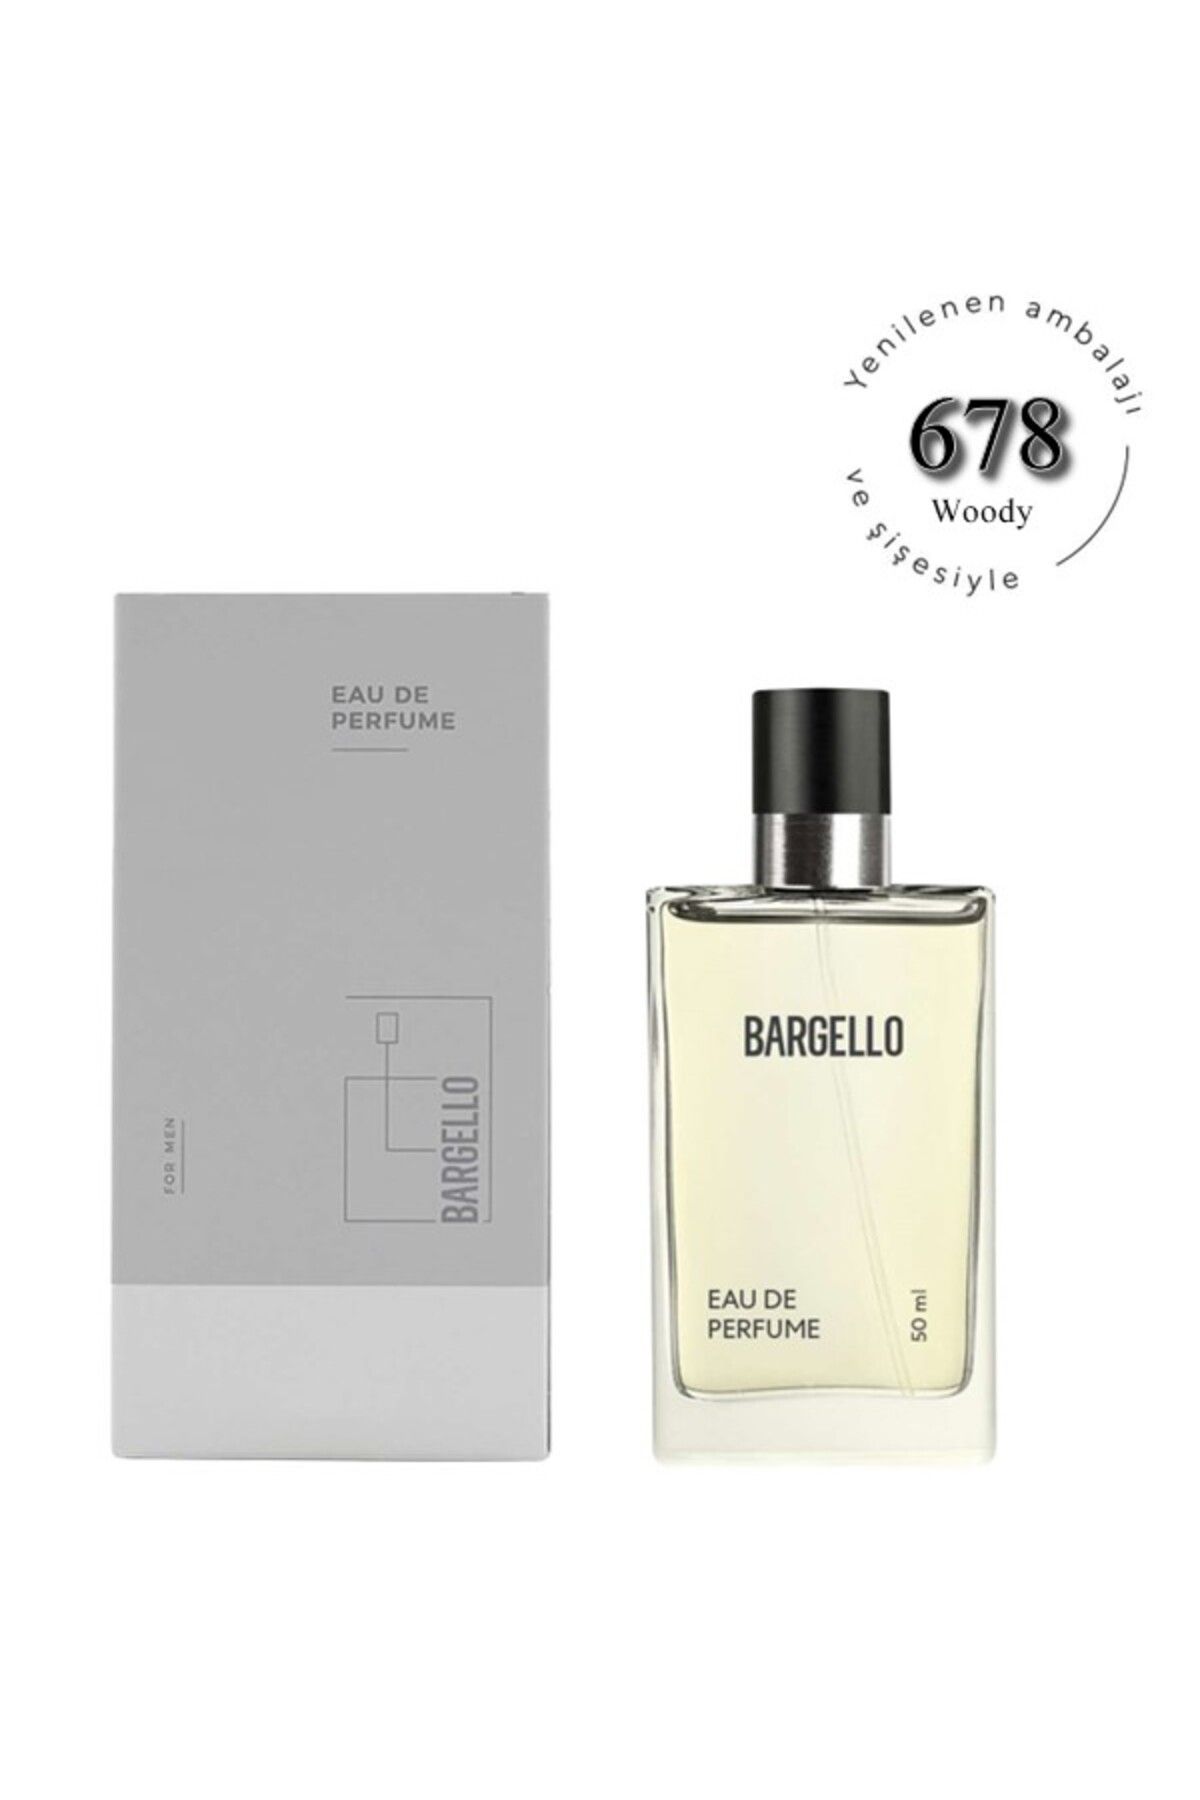 Bargello 678 Erkek Parfüm Edp 50 Ml Woody